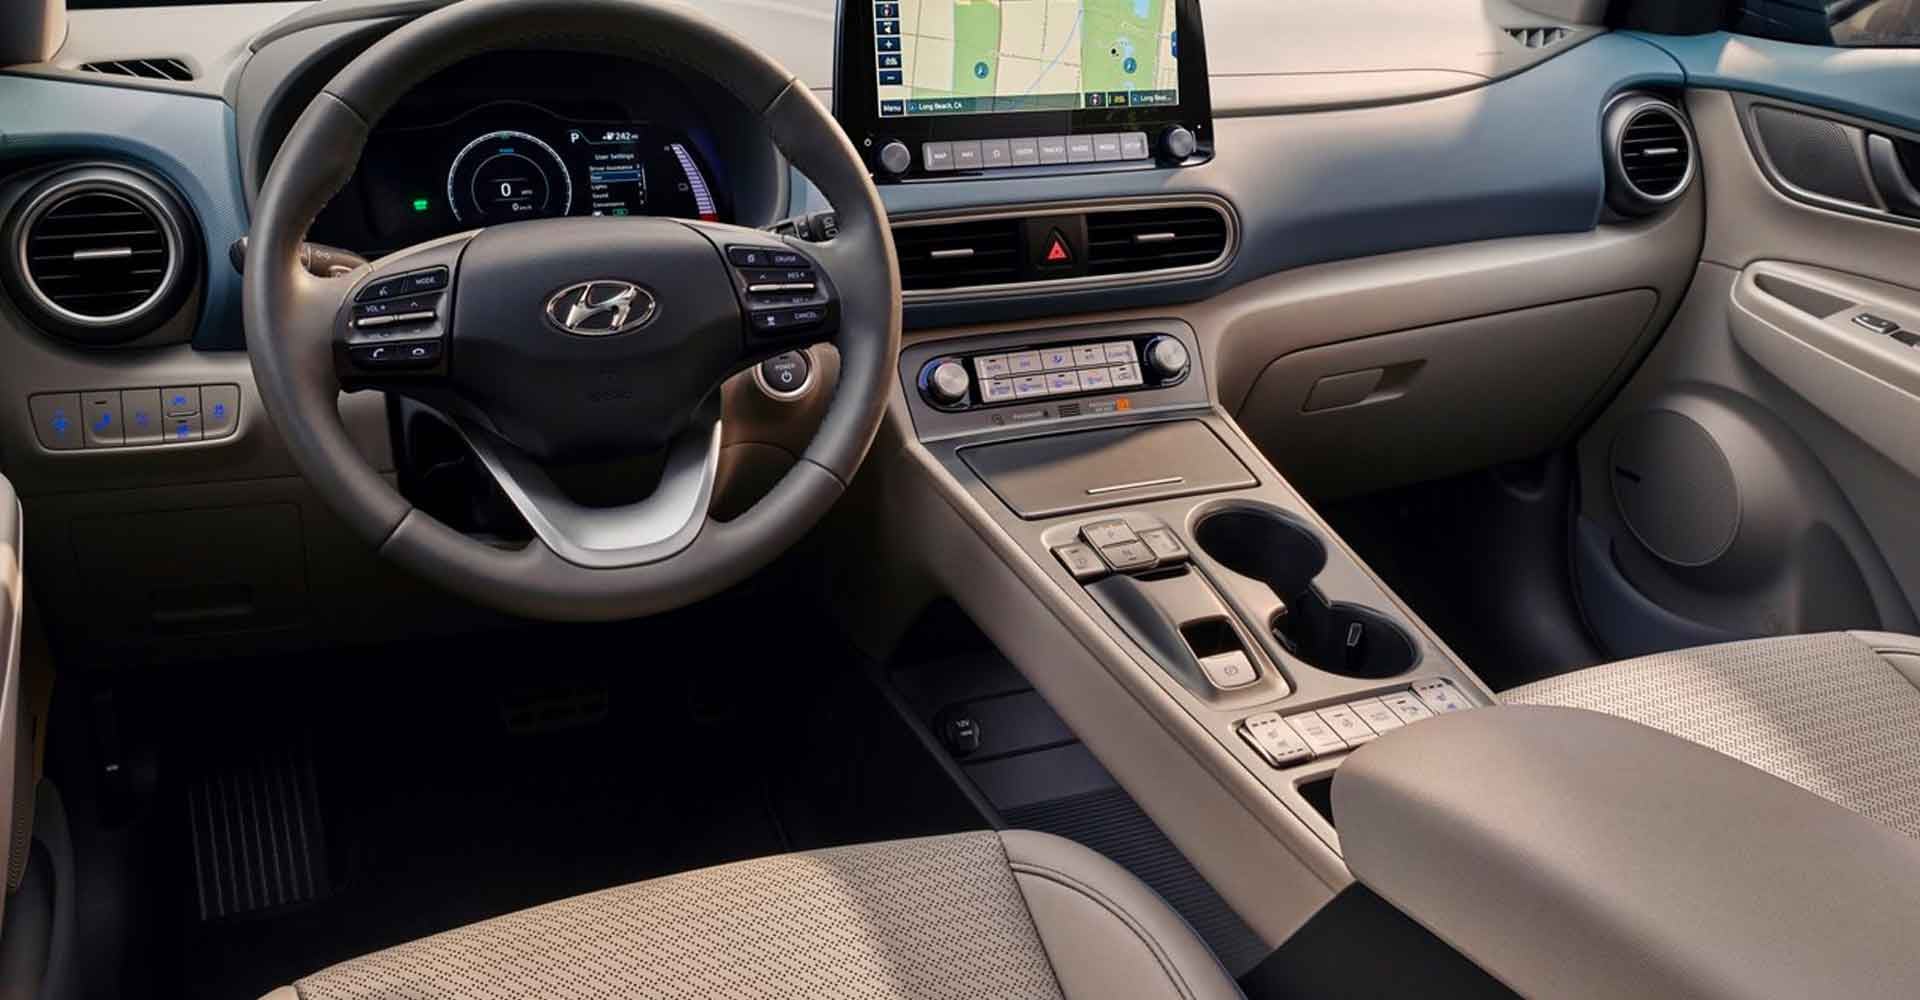 2021 Hyundai Konda interior